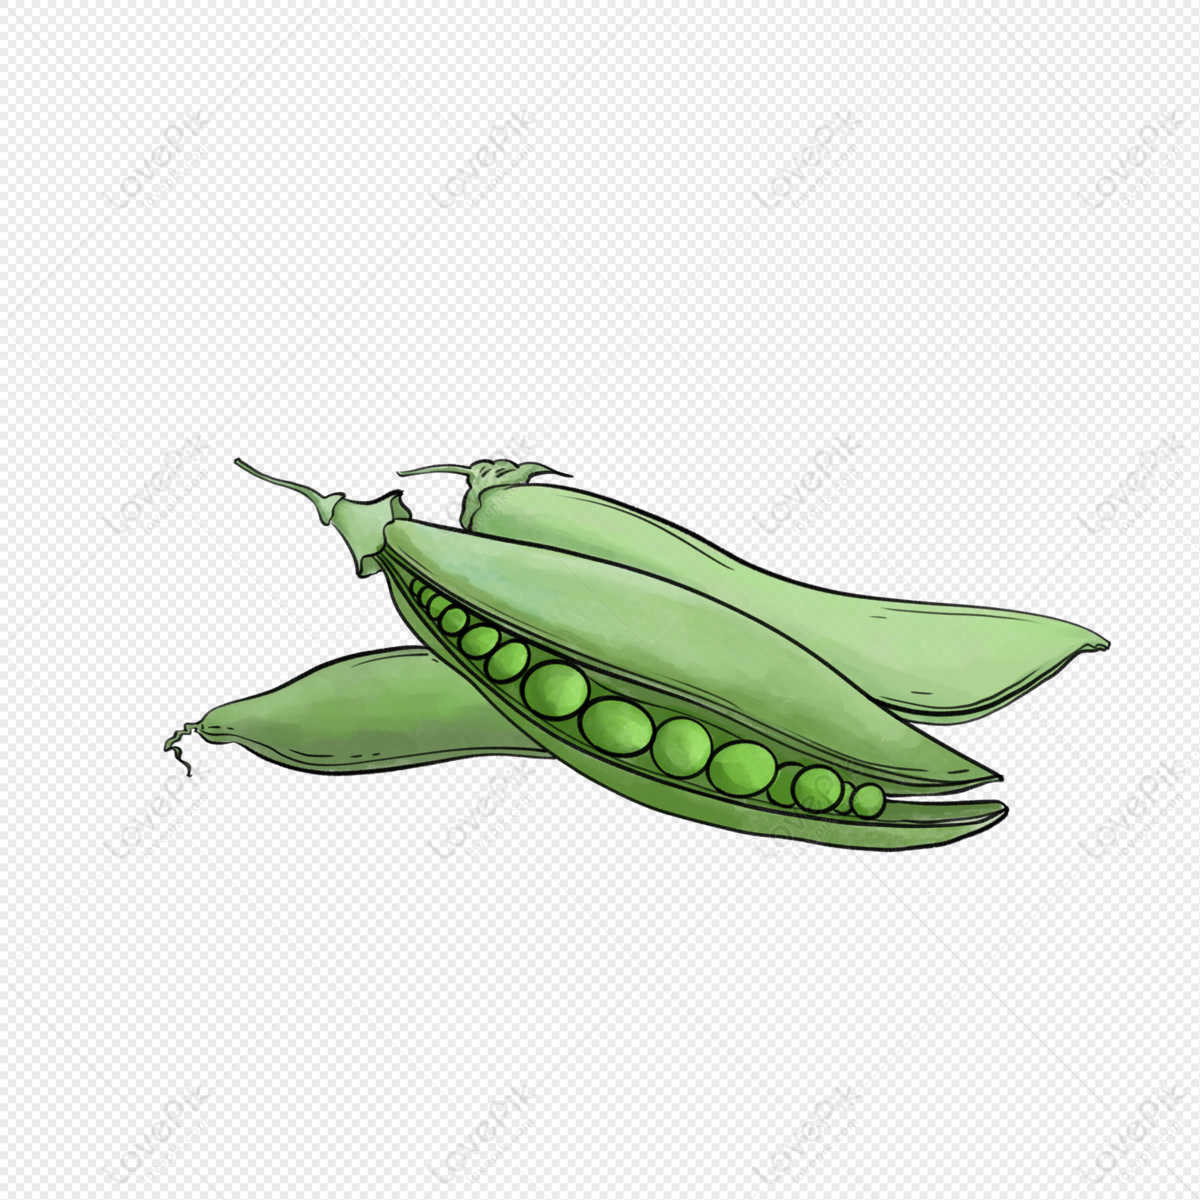 Free Green Peas Vector Art - Download 6+ Green Peas Icons & Graphics -  Pixabay